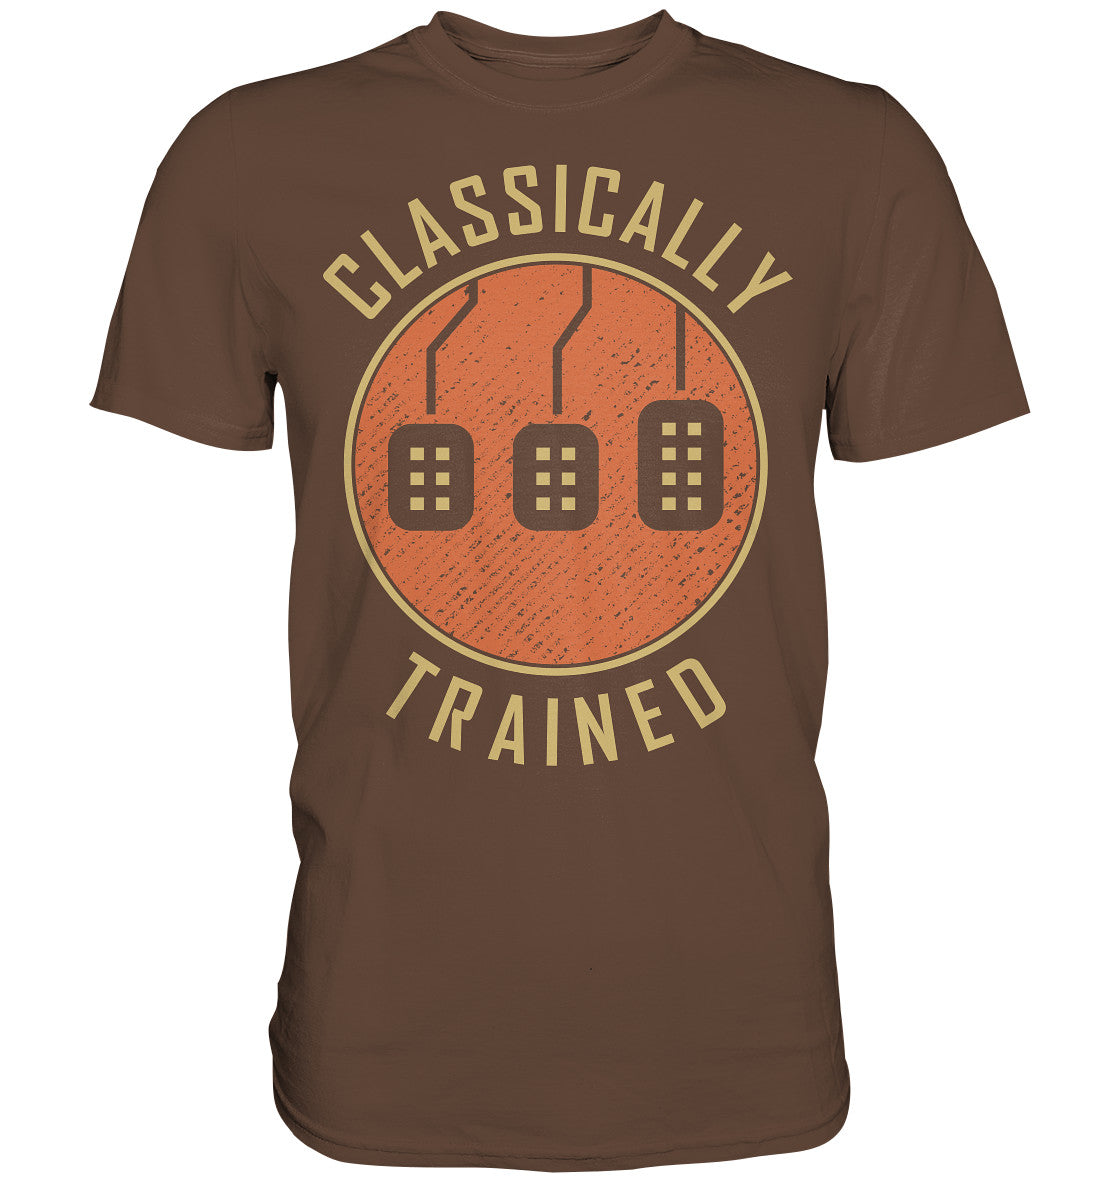 Classically trained - Premium Shirt